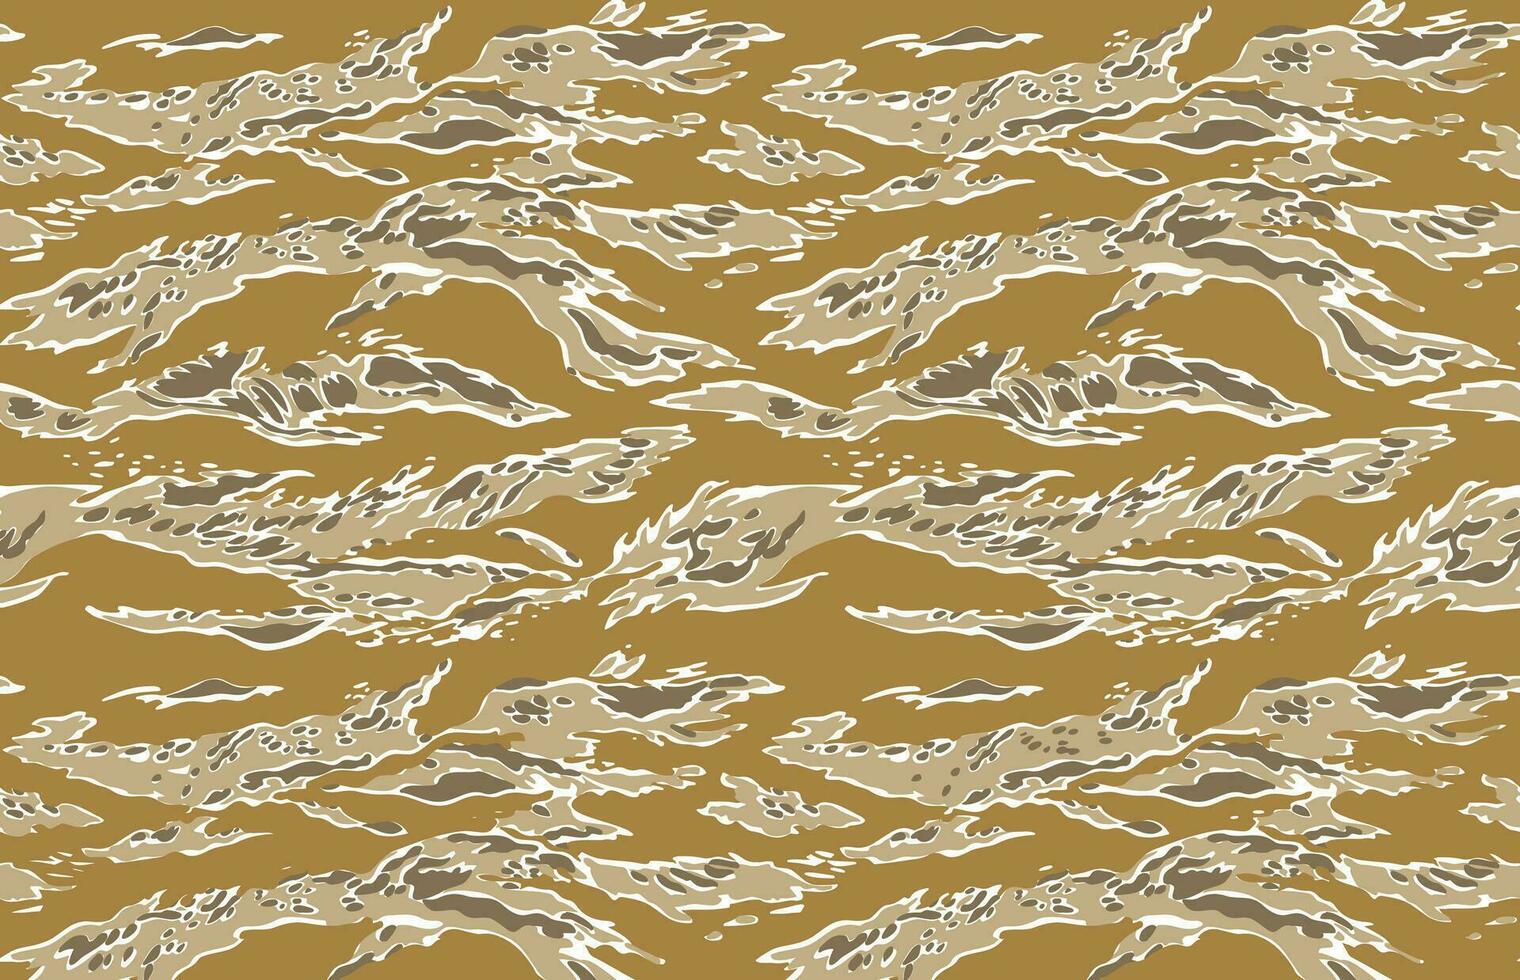 öken- tigerrand kamouflage vektor